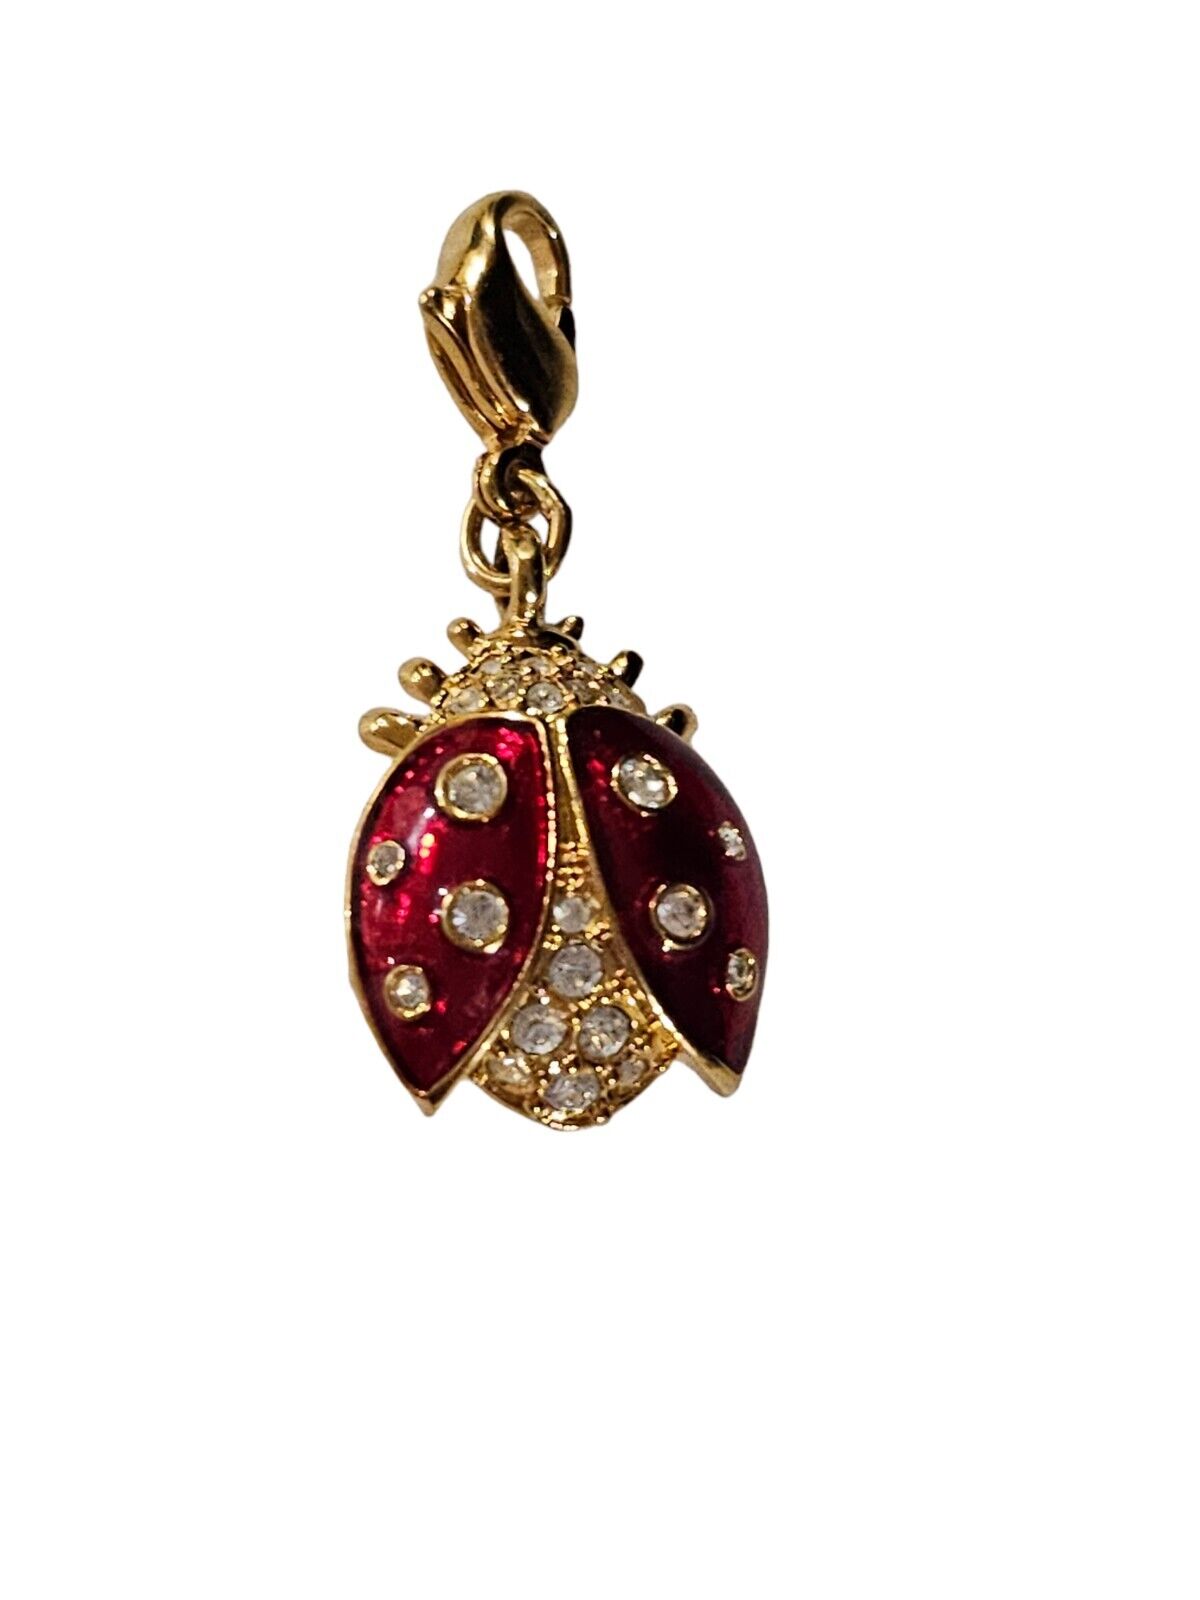 Swarovski Crystal Charm Lady Bug Charm Red Gold Insect Jewelry